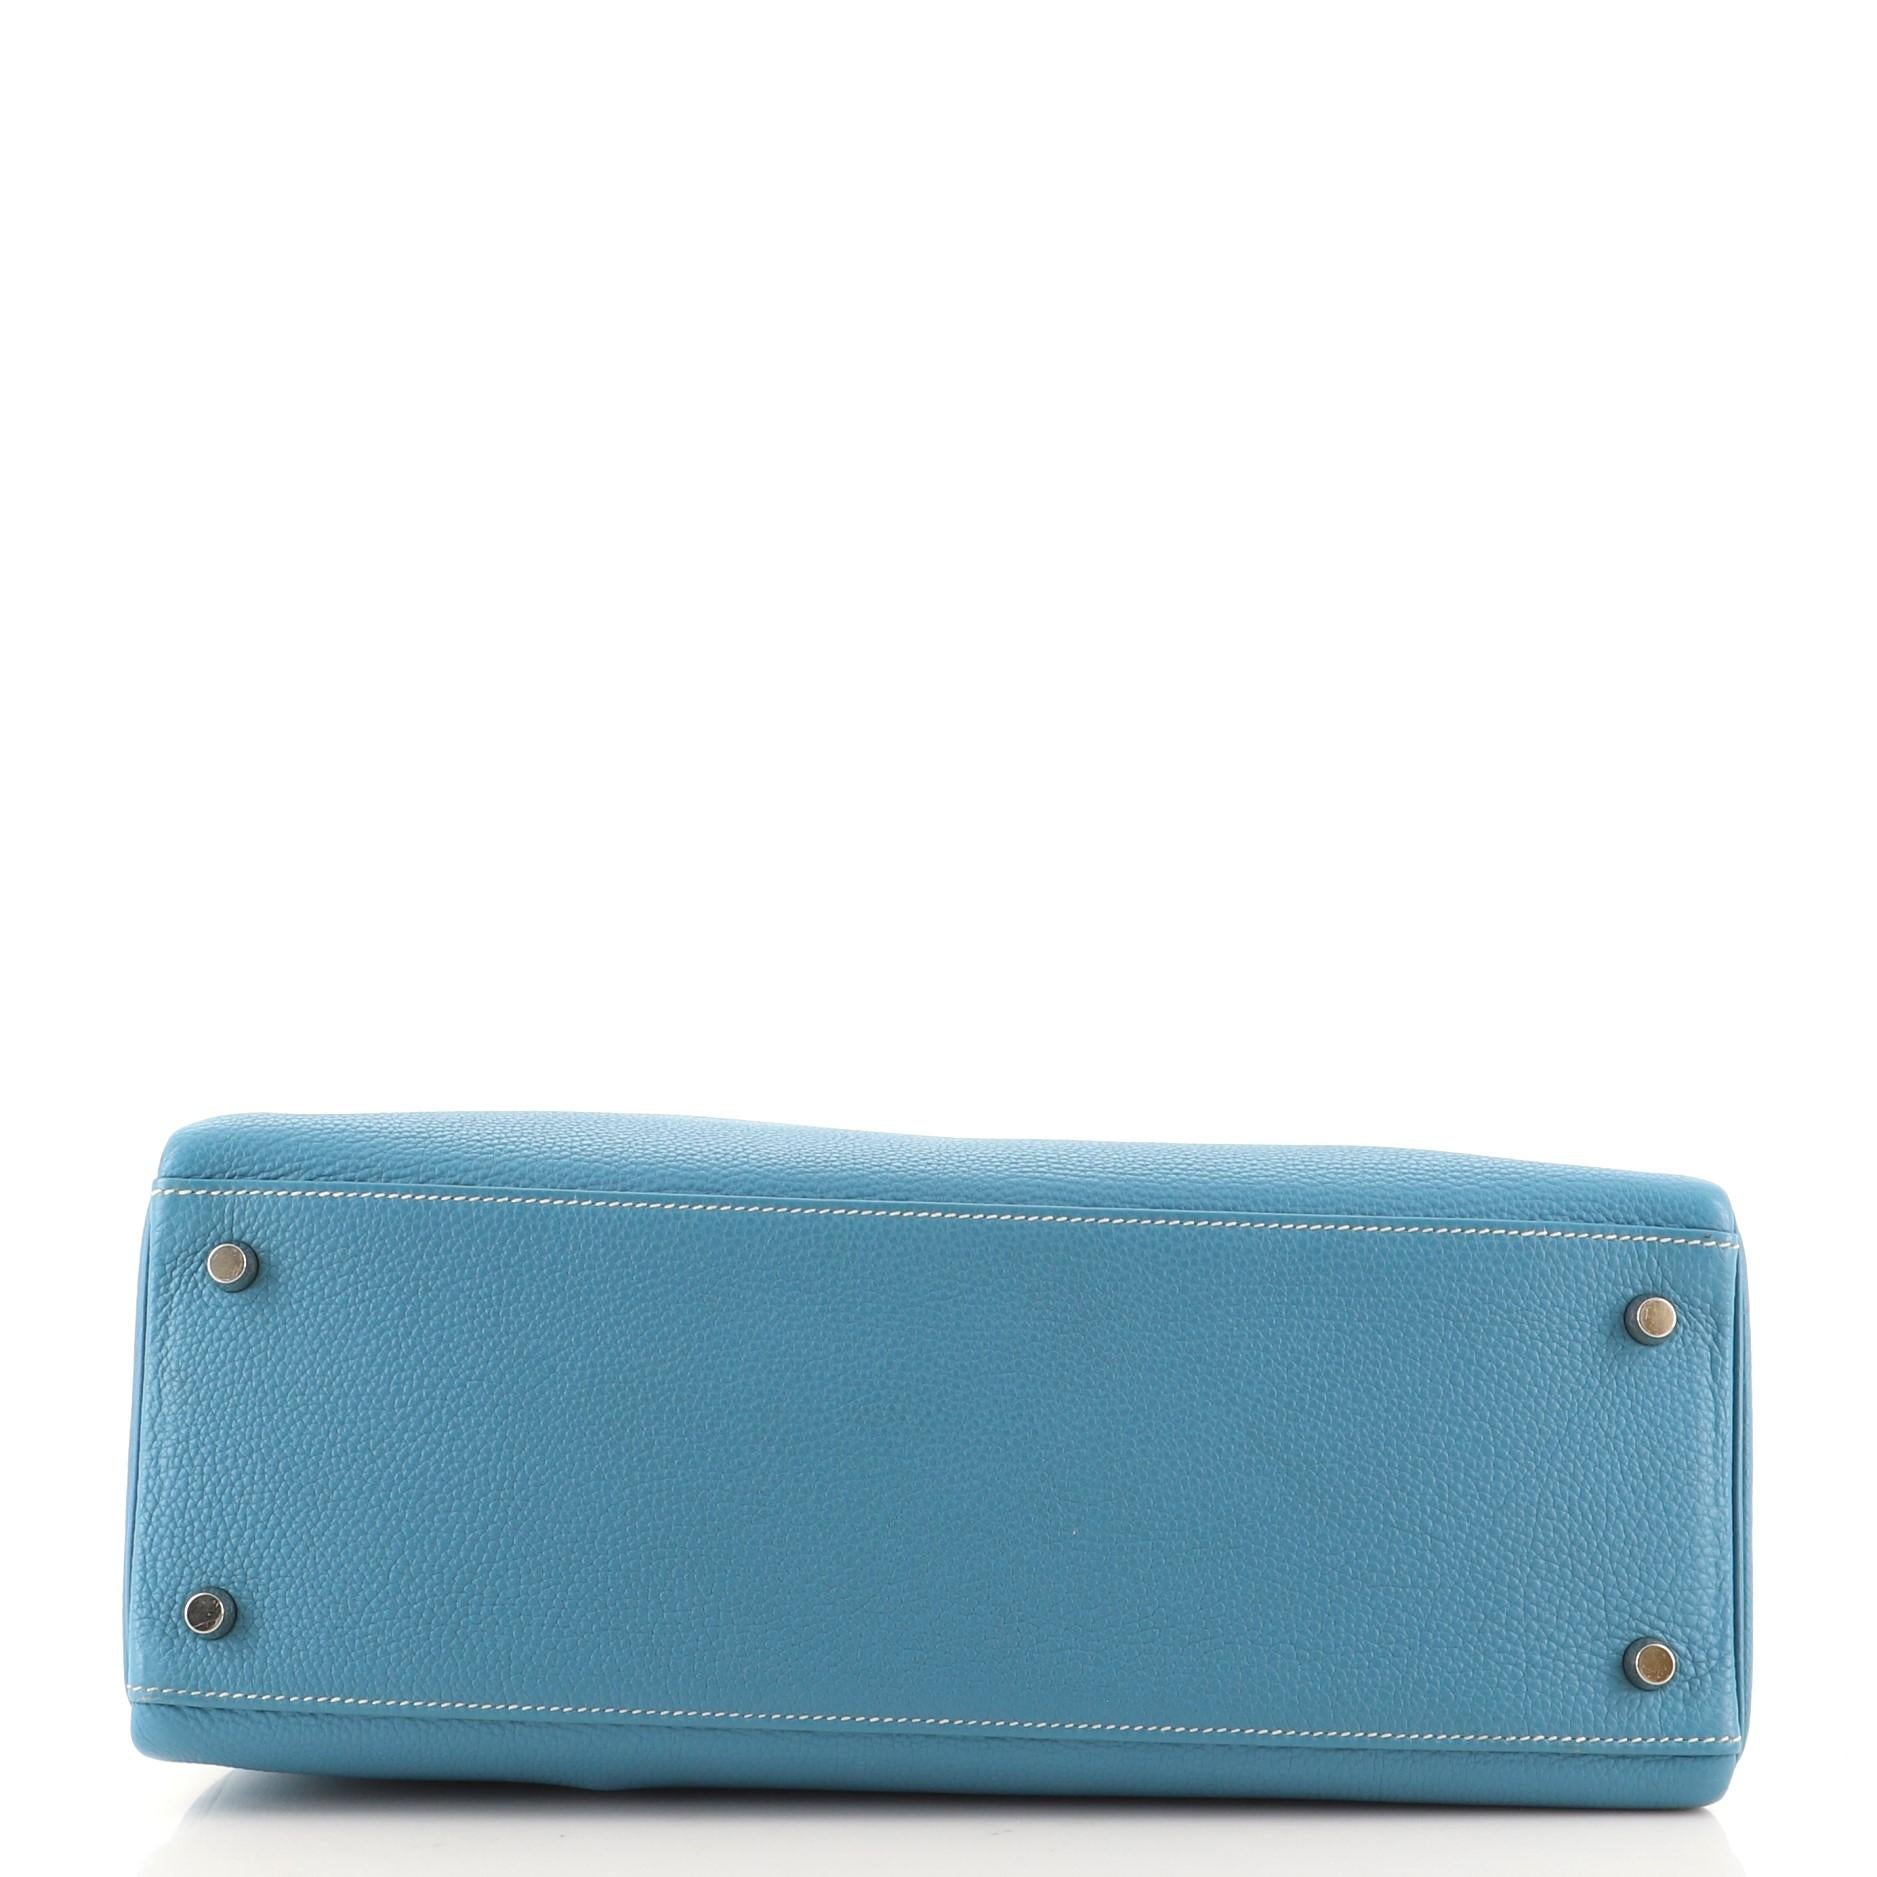 Women's or Men's Hermes Kelly Handbag Blue Jean Togo with Palladium Hardware 35